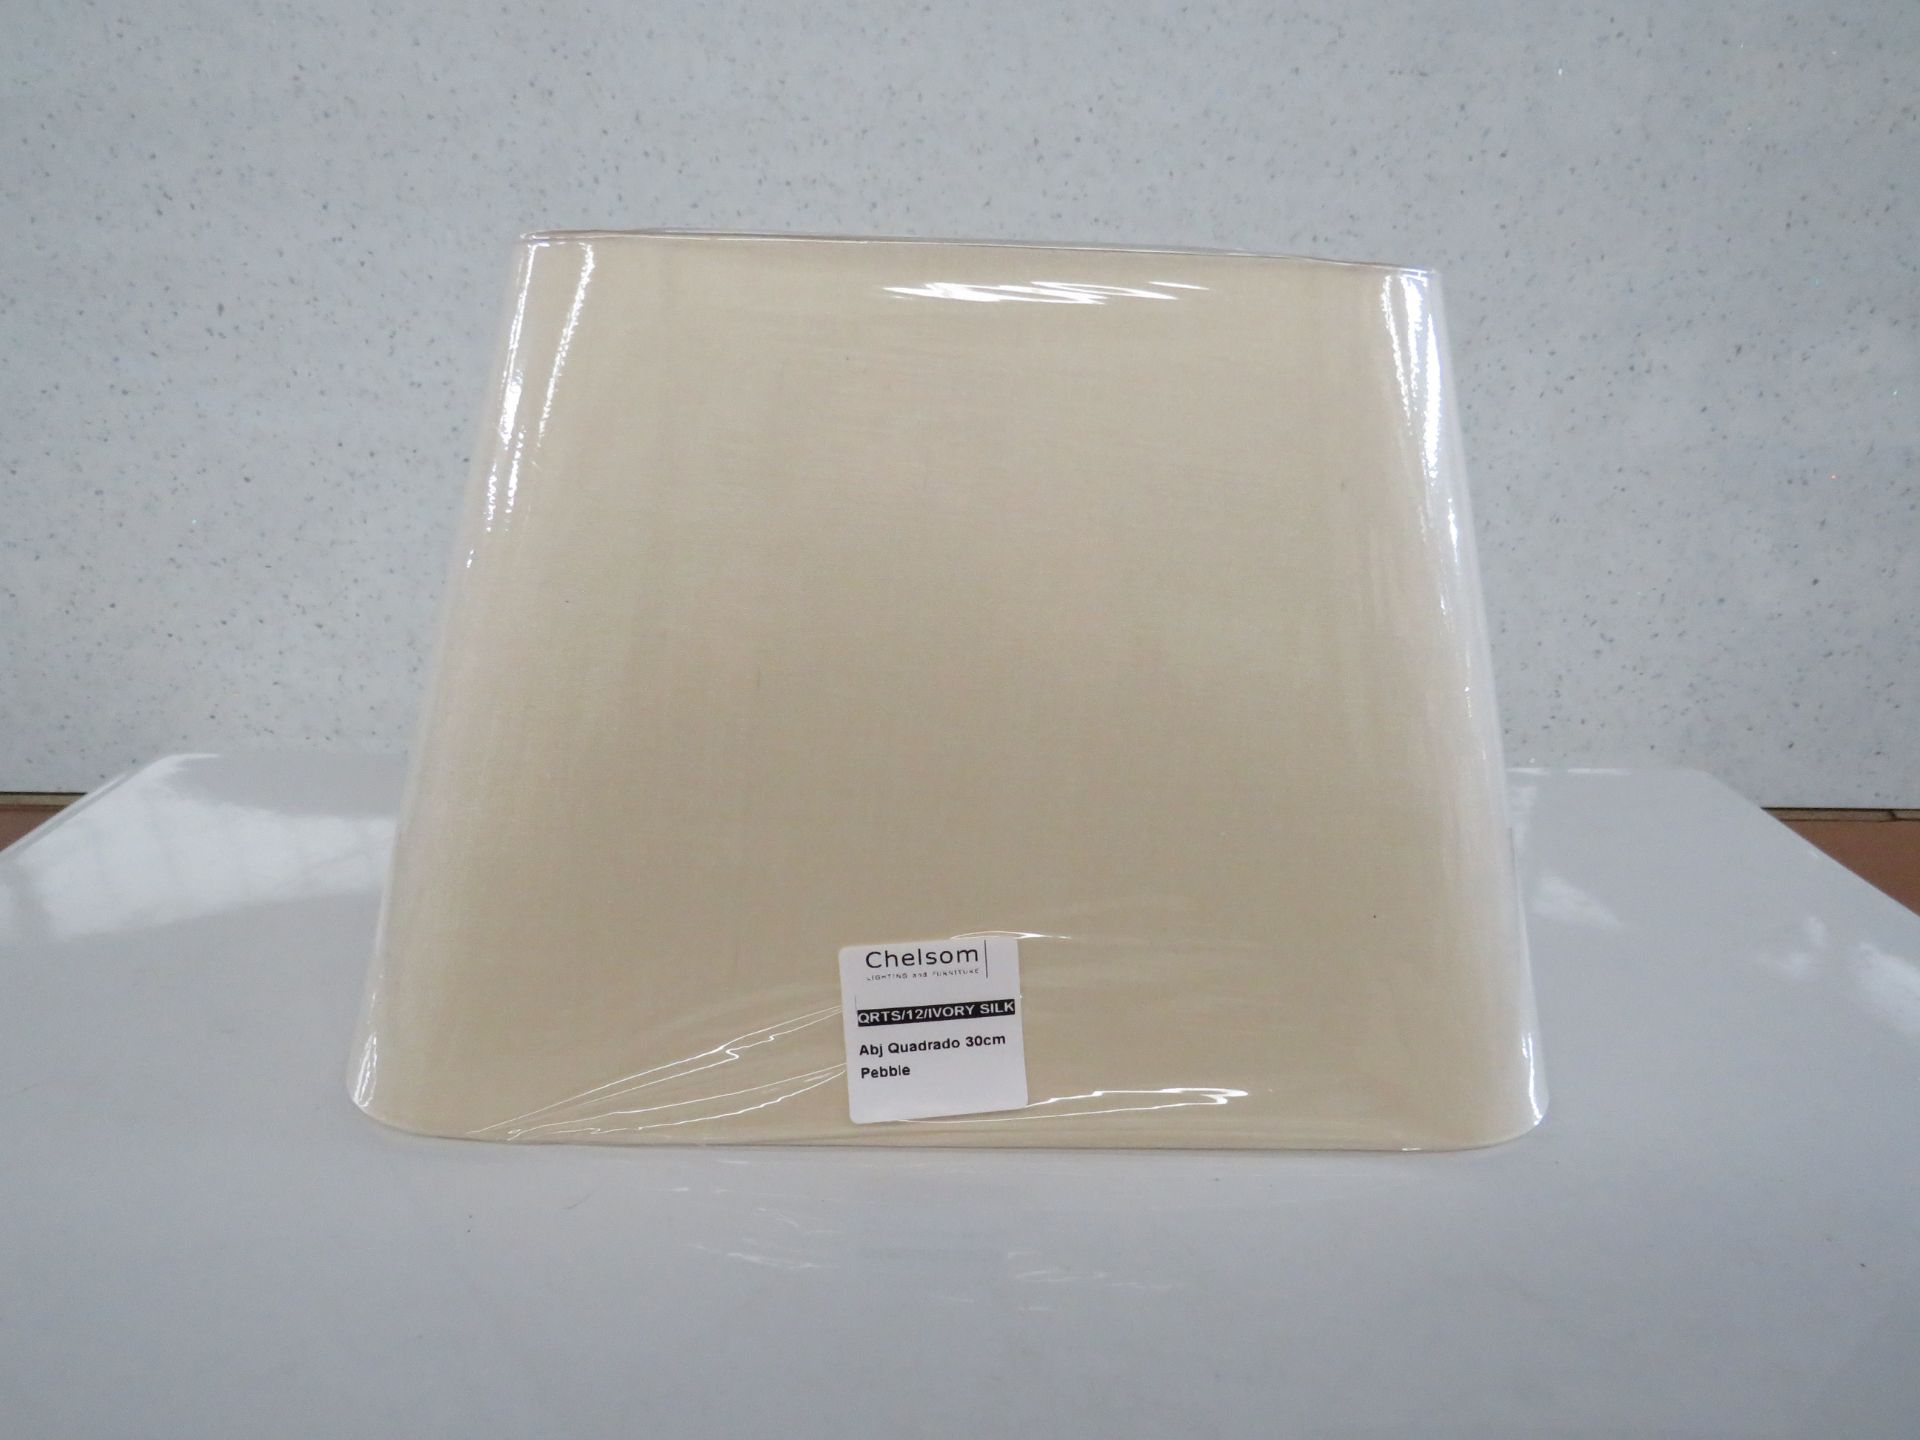 6x Chelsom - Ivory Silk Pebble 30cm Light Shade - New & Packaged.